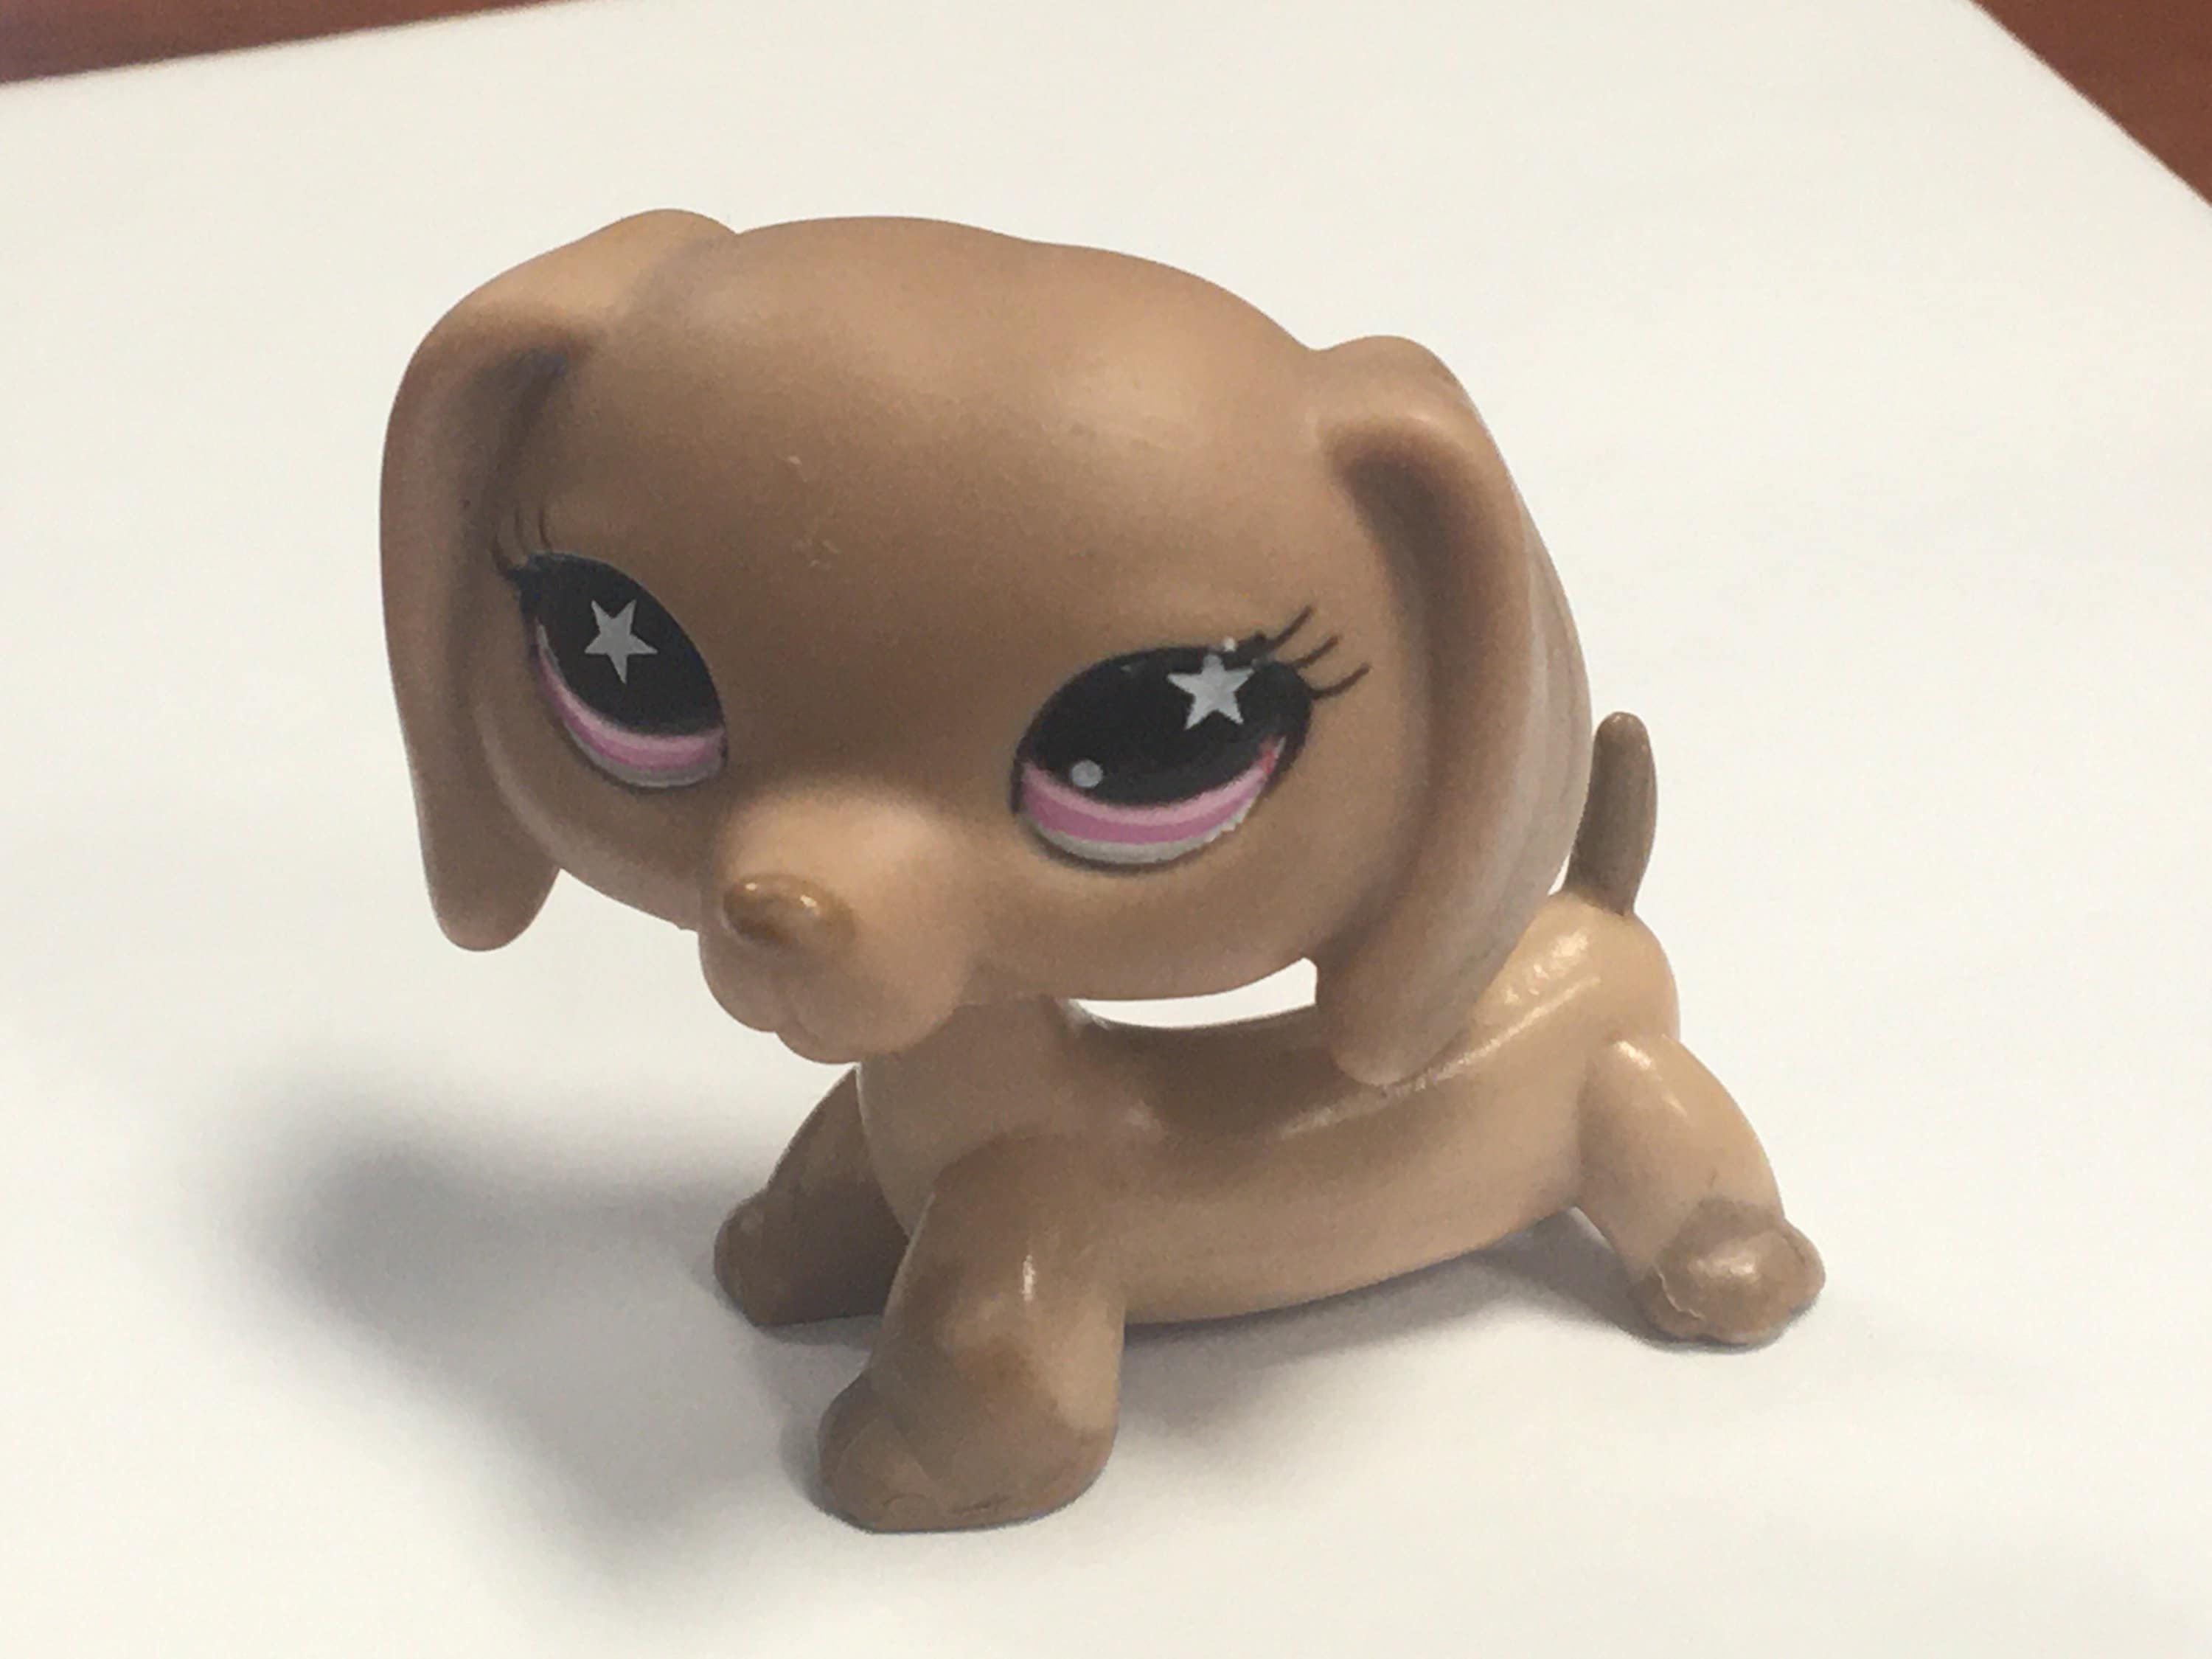 Littlest Pet Shop Animal Puppy Pink Eyes Brown Tan Dog Figure Child Toy UK 